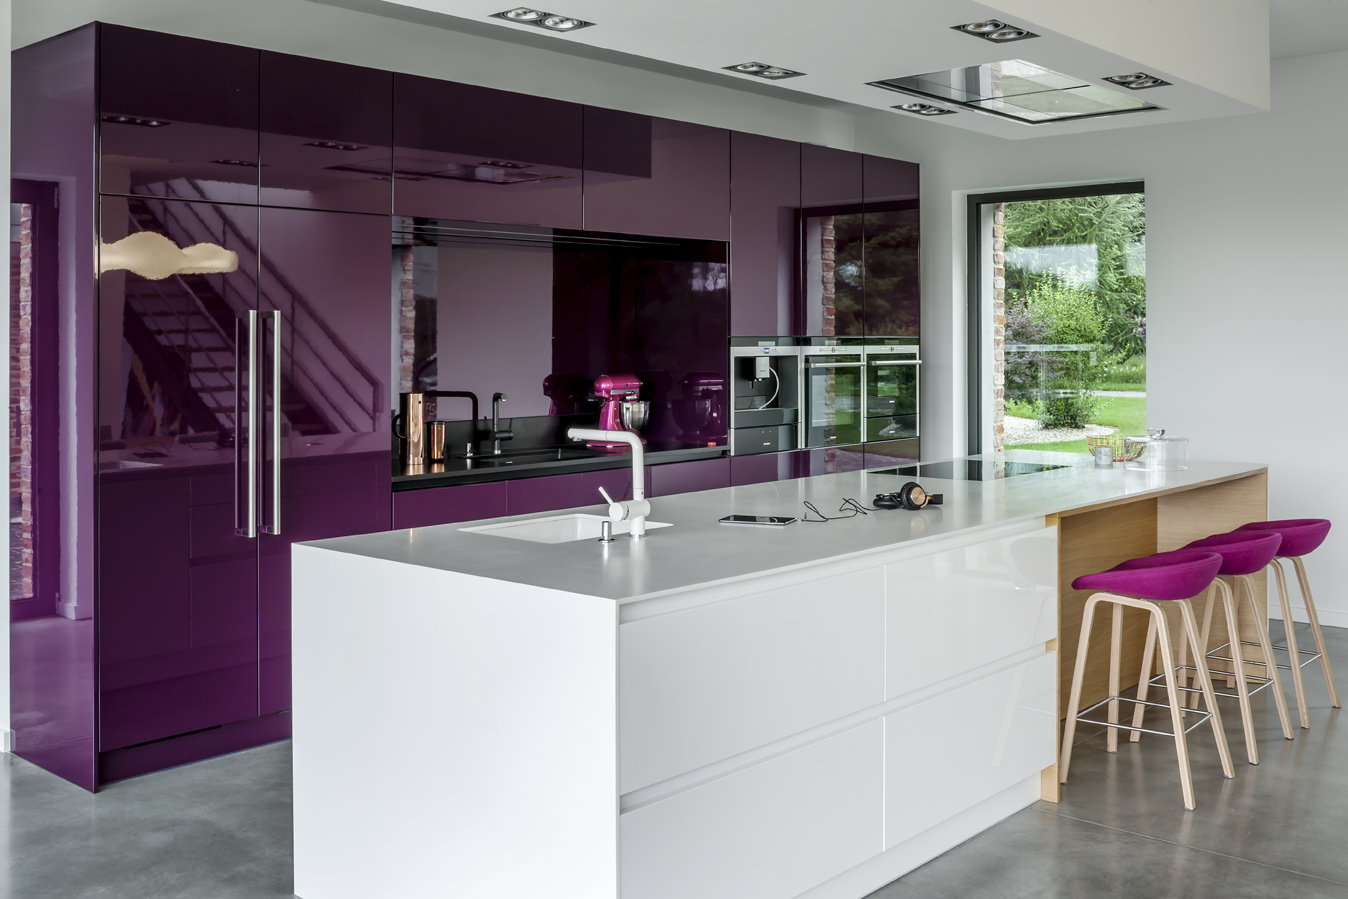 beautiful kitchen design in purple tint